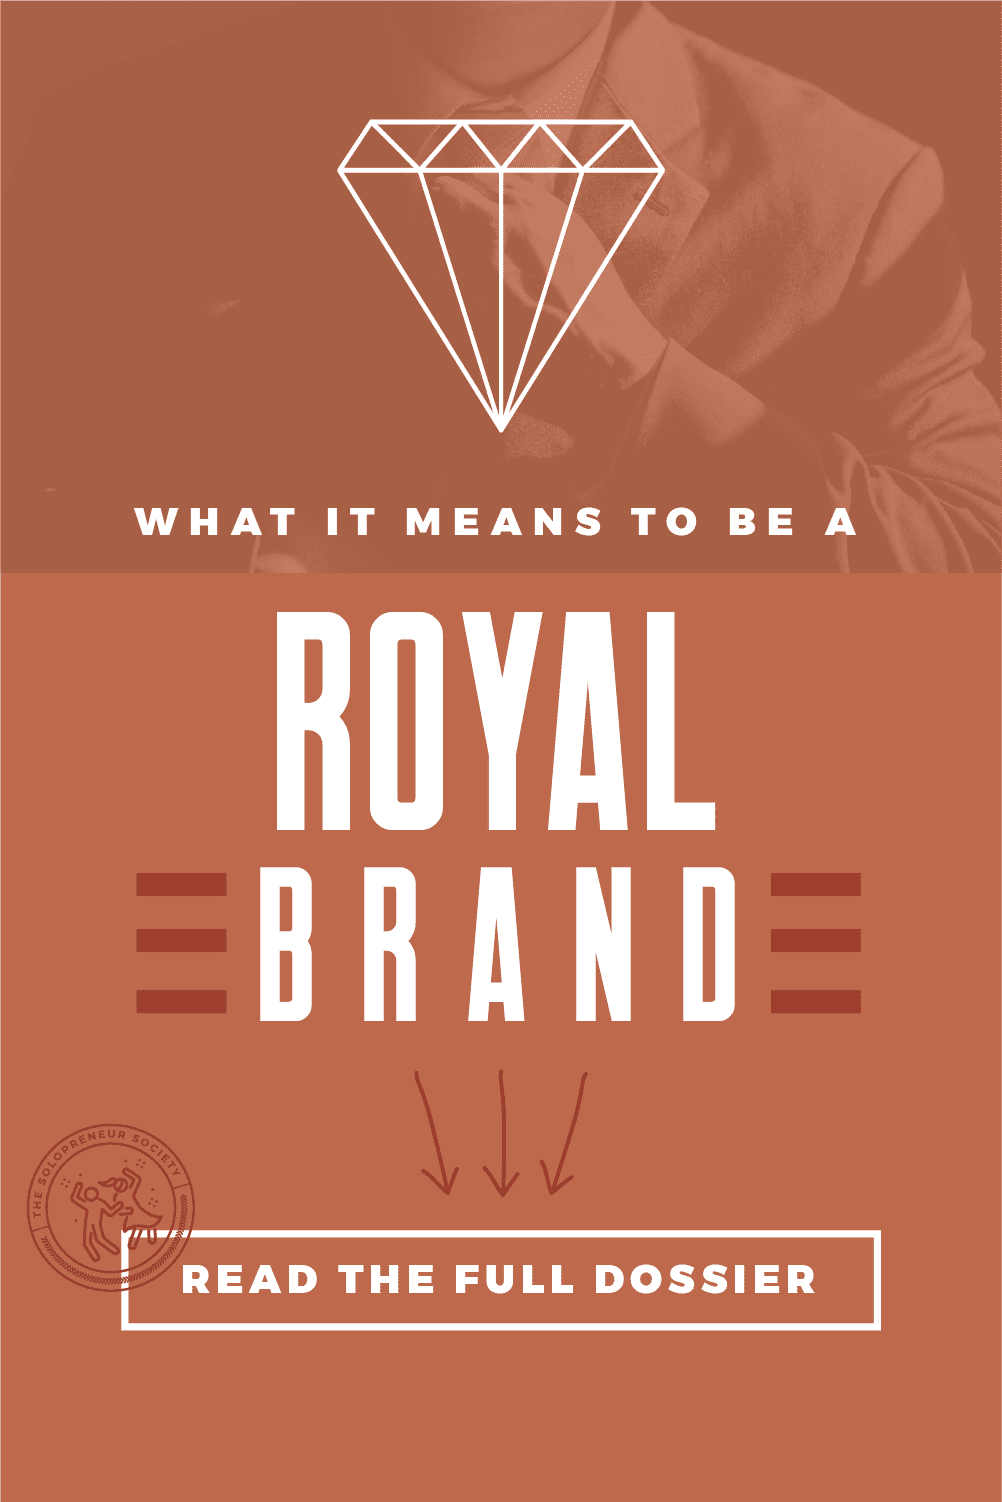 Royal Archetype Brand Personality